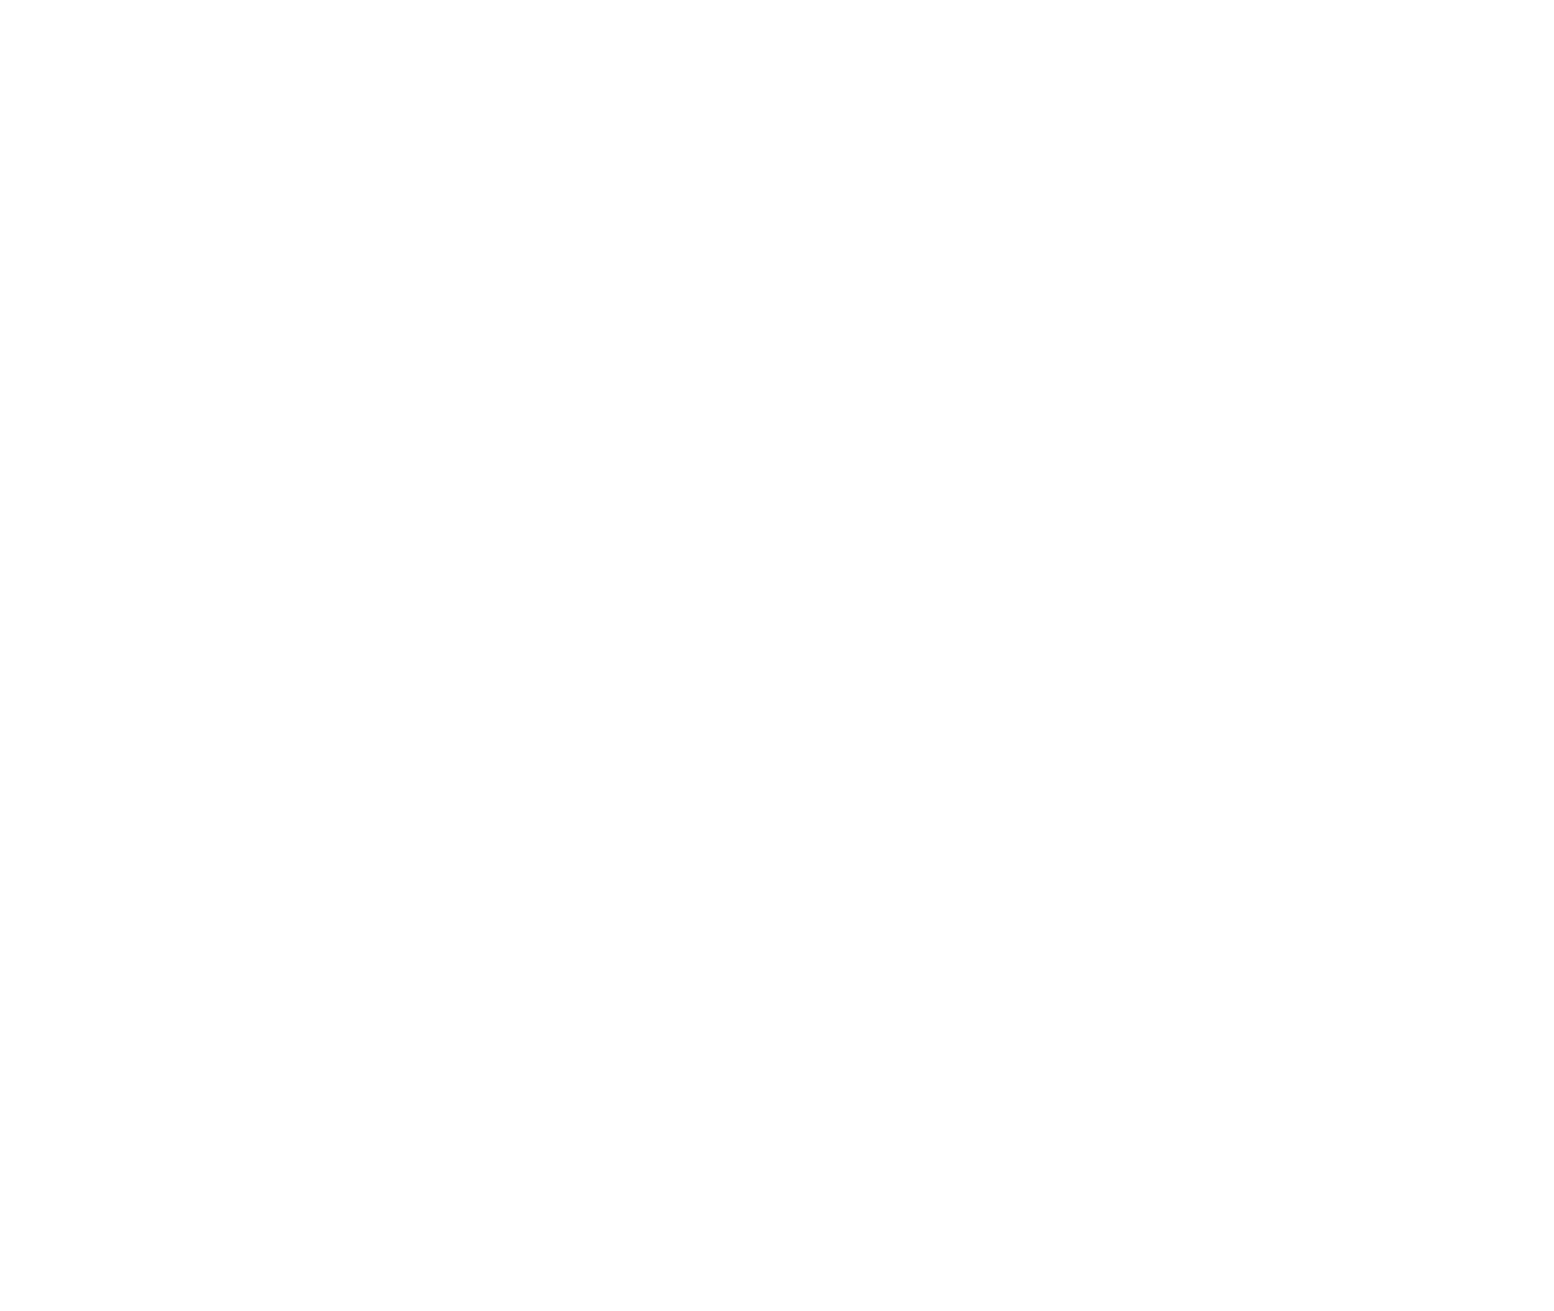 CASIO logo for dark backgrounds (transparent PNG)